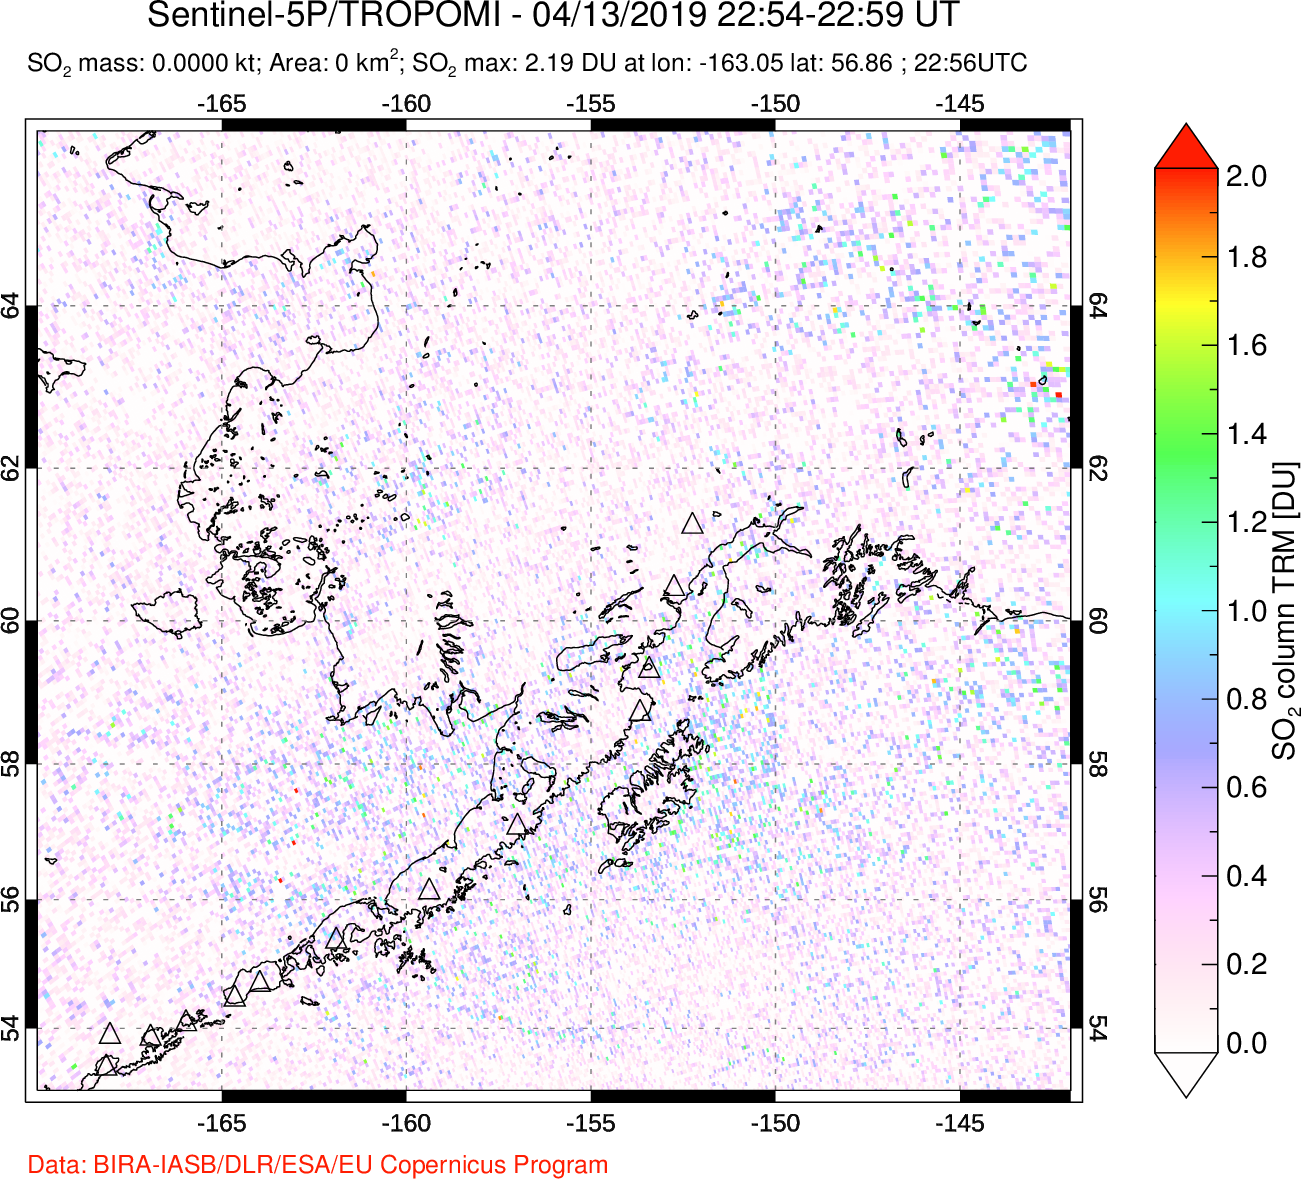 A sulfur dioxide image over Alaska, USA on Apr 13, 2019.